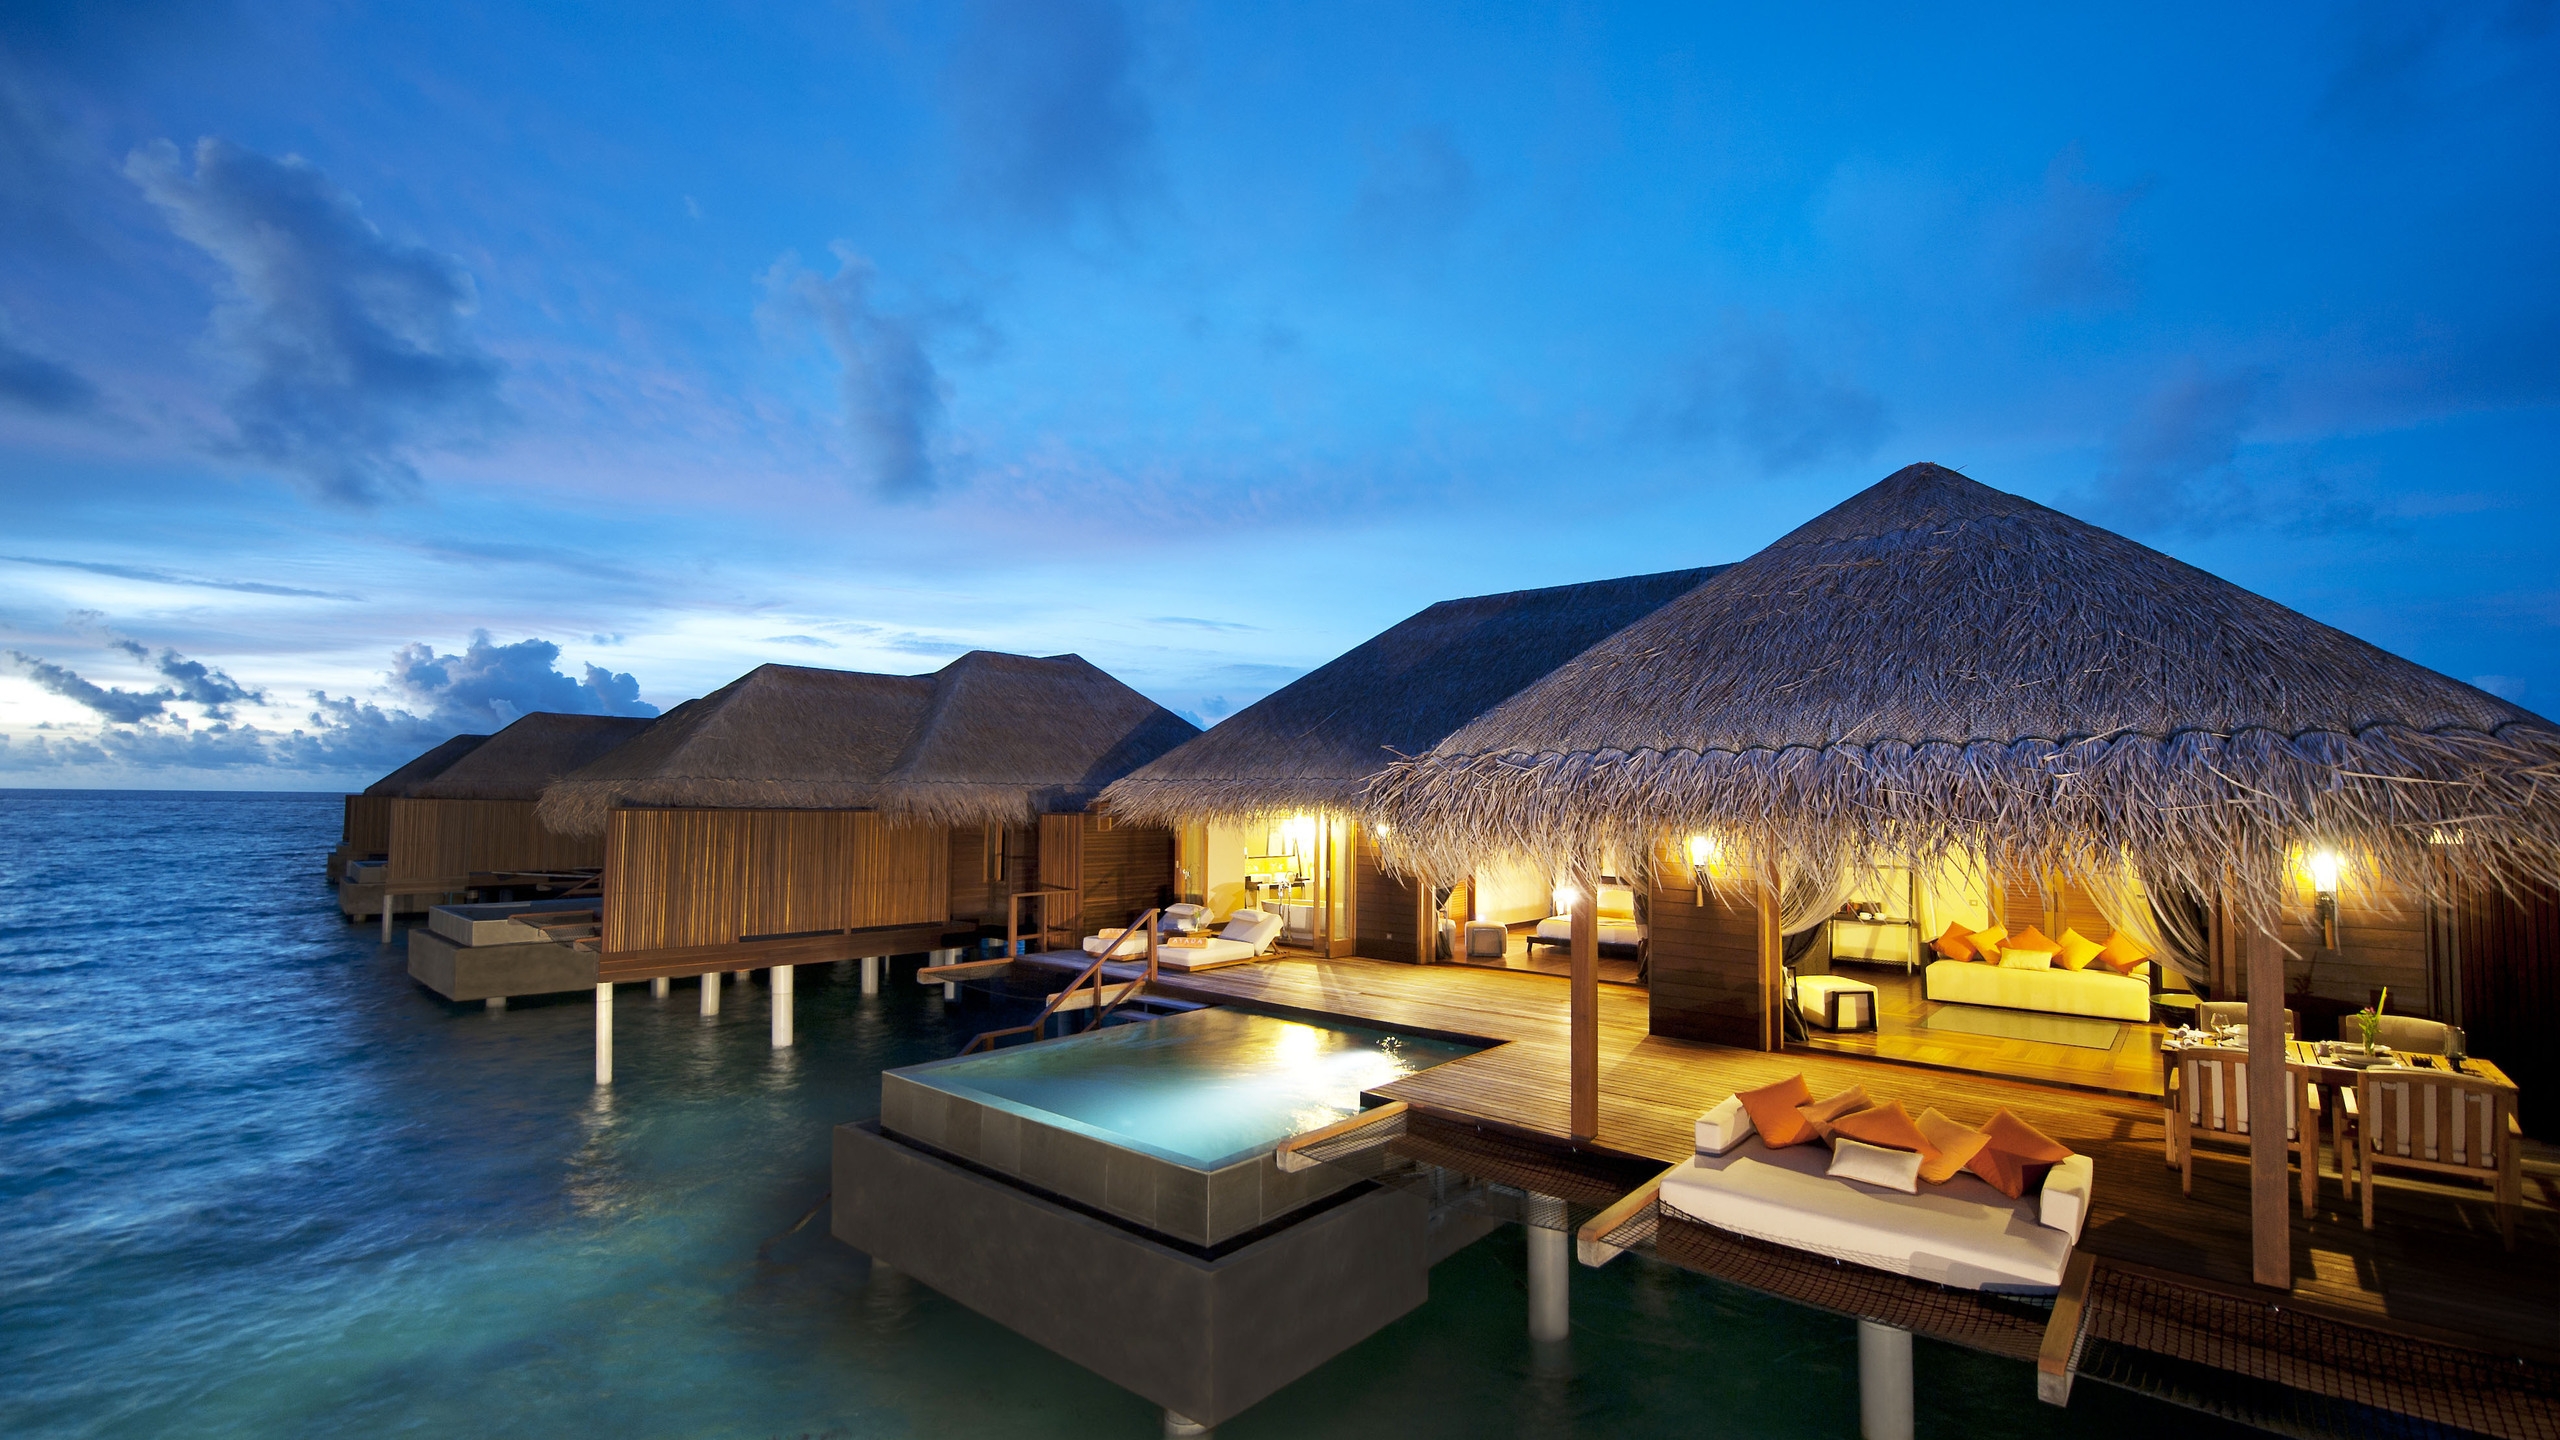 Maldives Ayada Hotel for 2560x1440 HDTV resolution